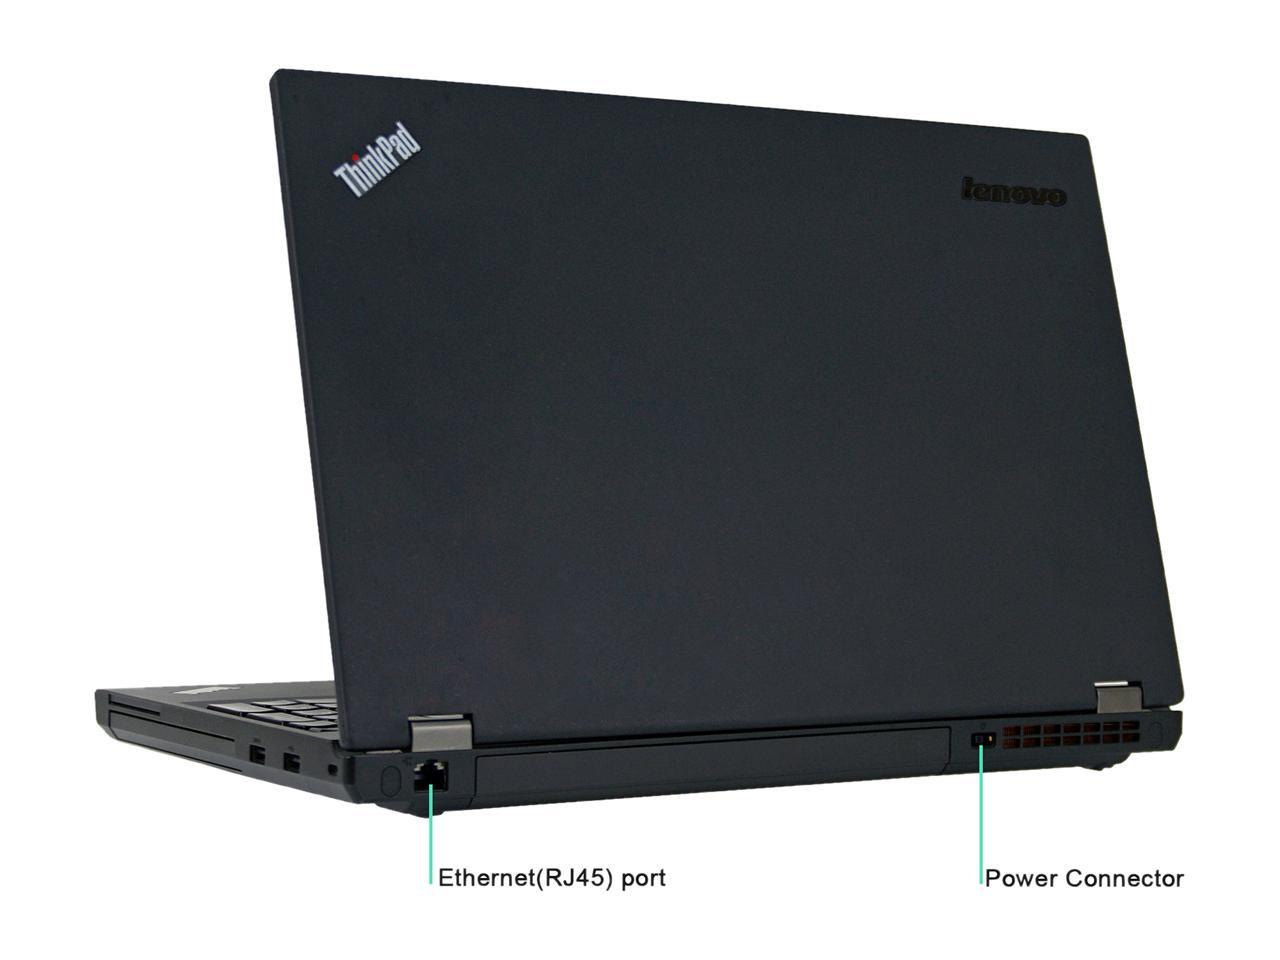 Lenovo Grade A Laptop W541 Intel Core i7 4th Gen 4810MQ (2.80 GHz) 8 GB Memory 500 GB SSD 15.6" Windows 10 Pro 64-Bit